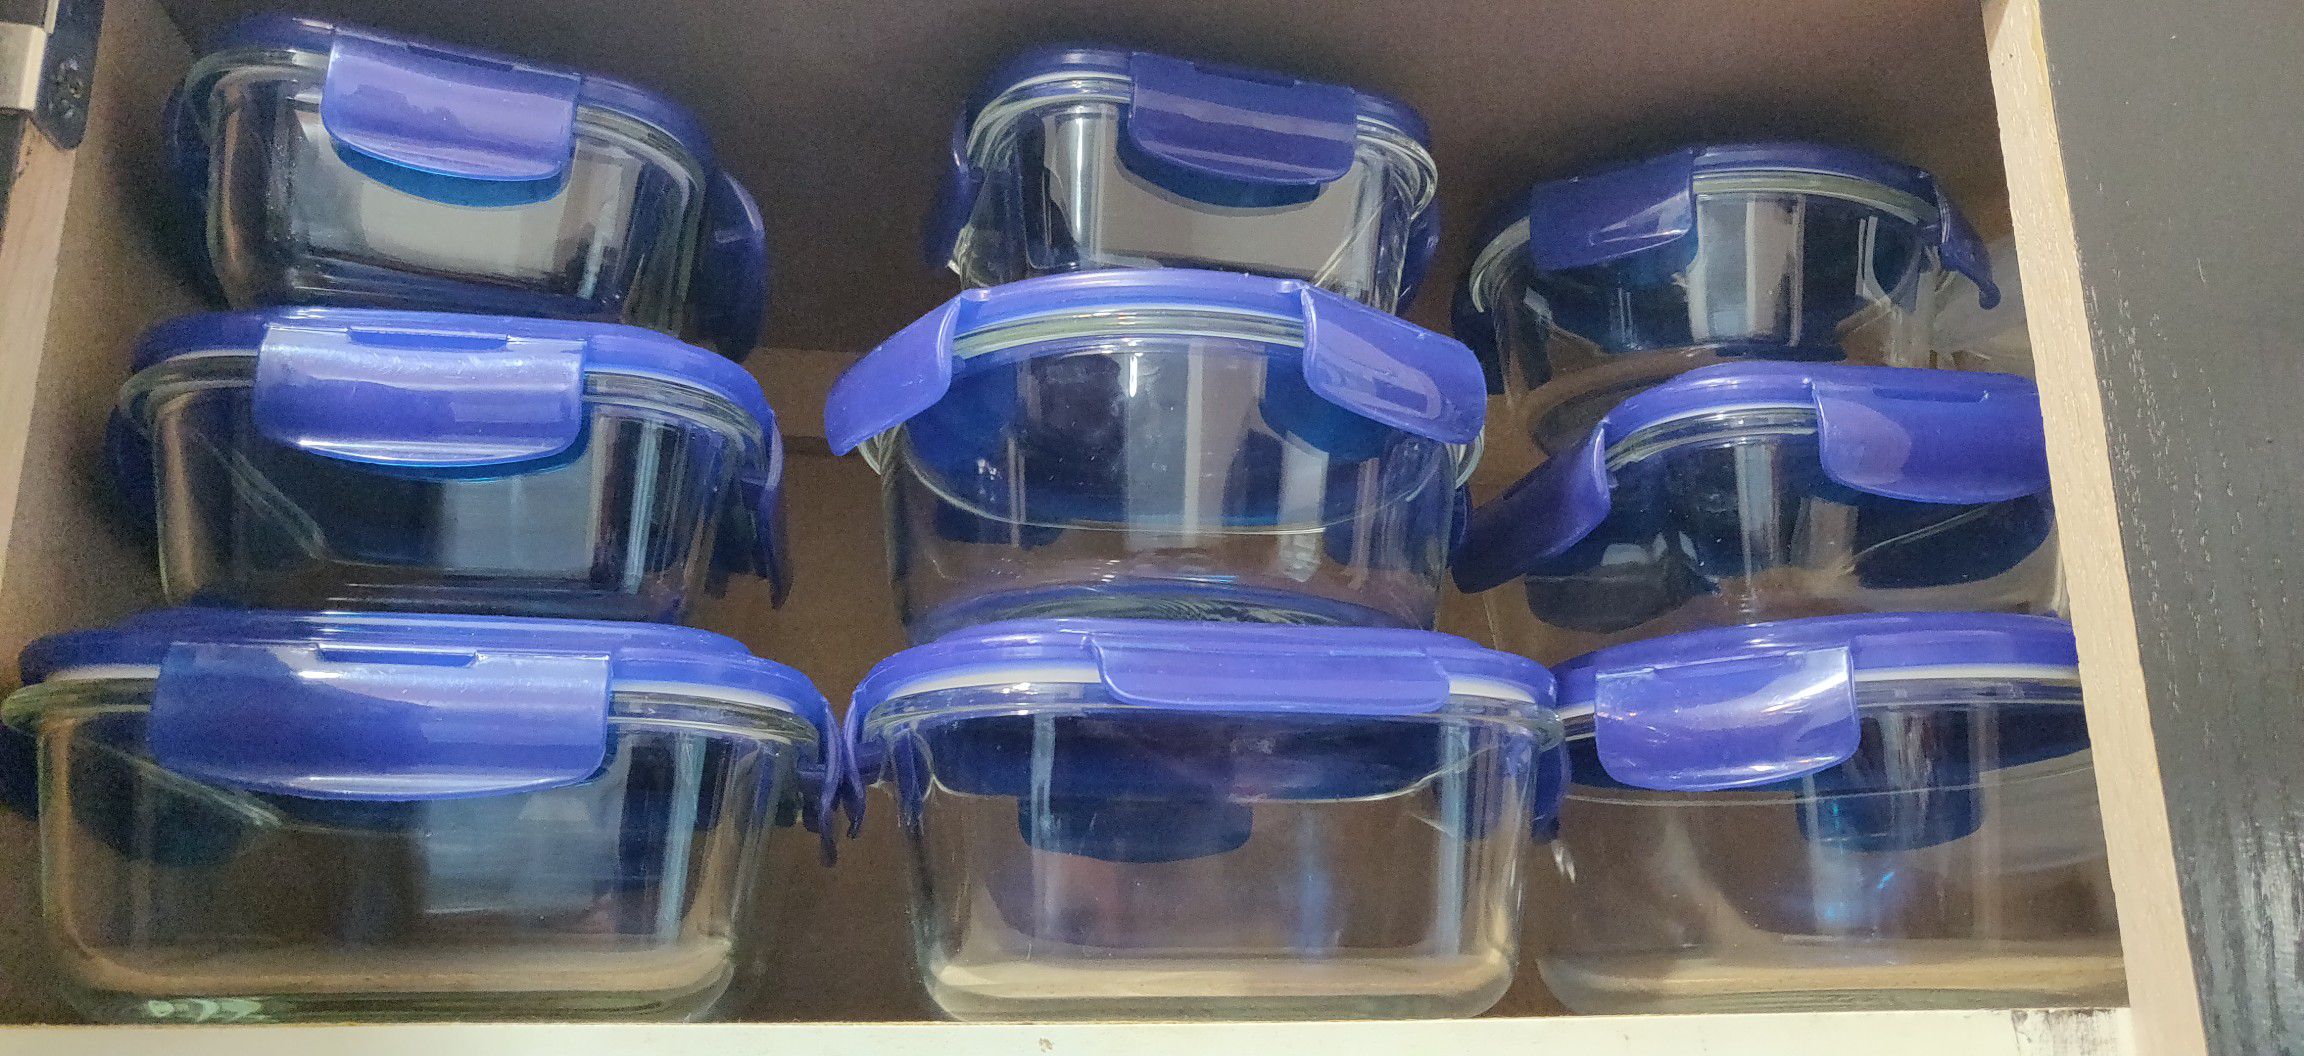 Kitchen Storage containers